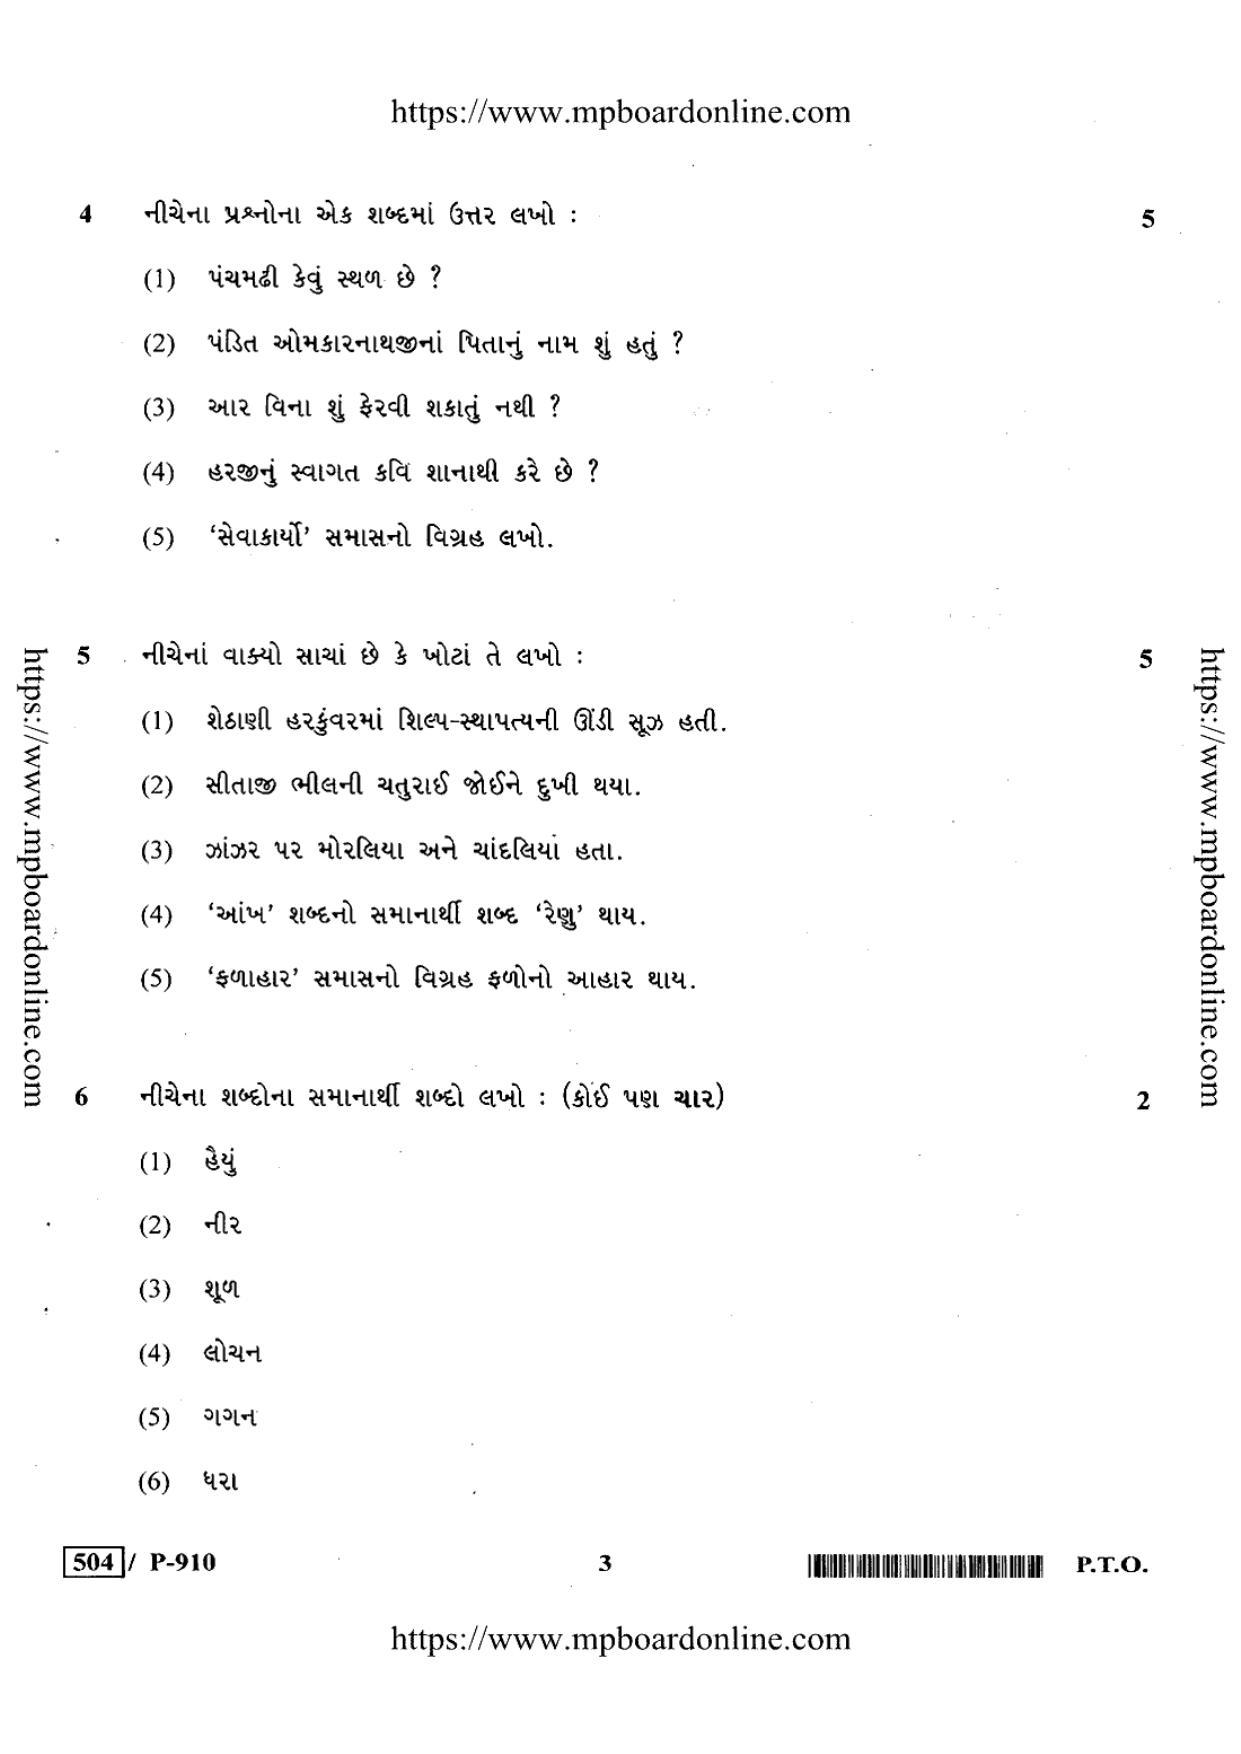 MP Board Class 10 Gujrat General 2020 Question Paper - Page 3